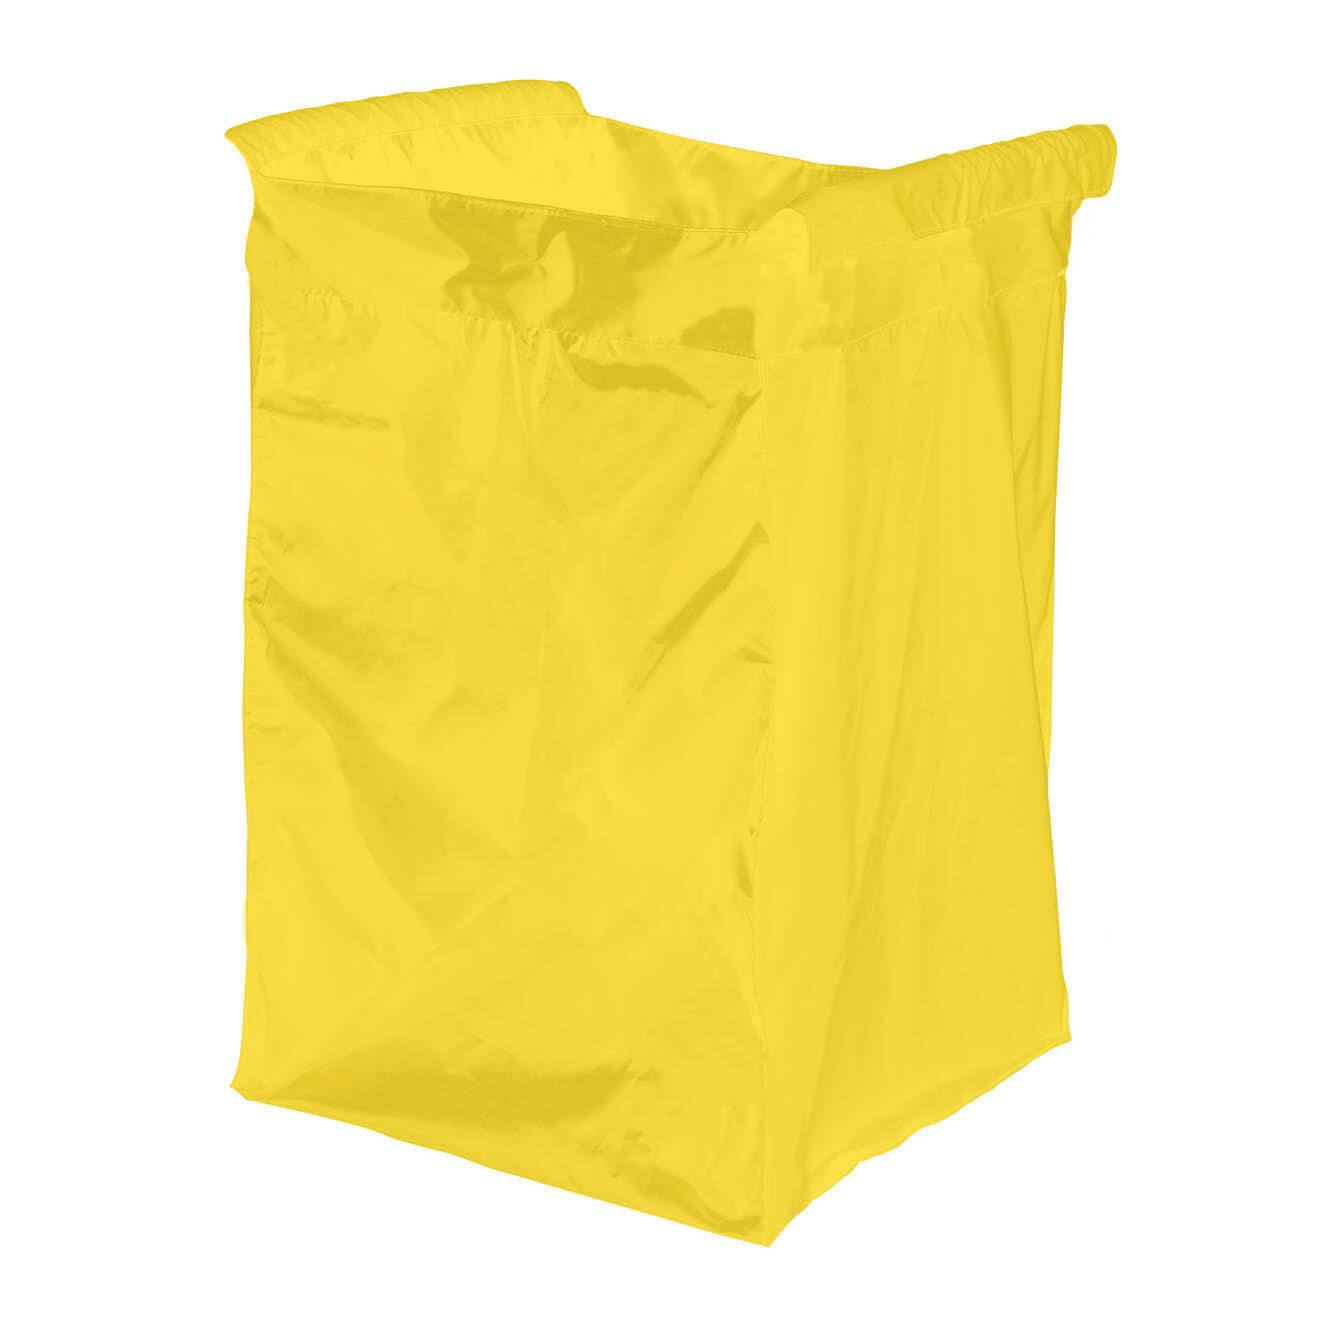 Replacement Bag to suit Plastic X Shape Laundry Cart